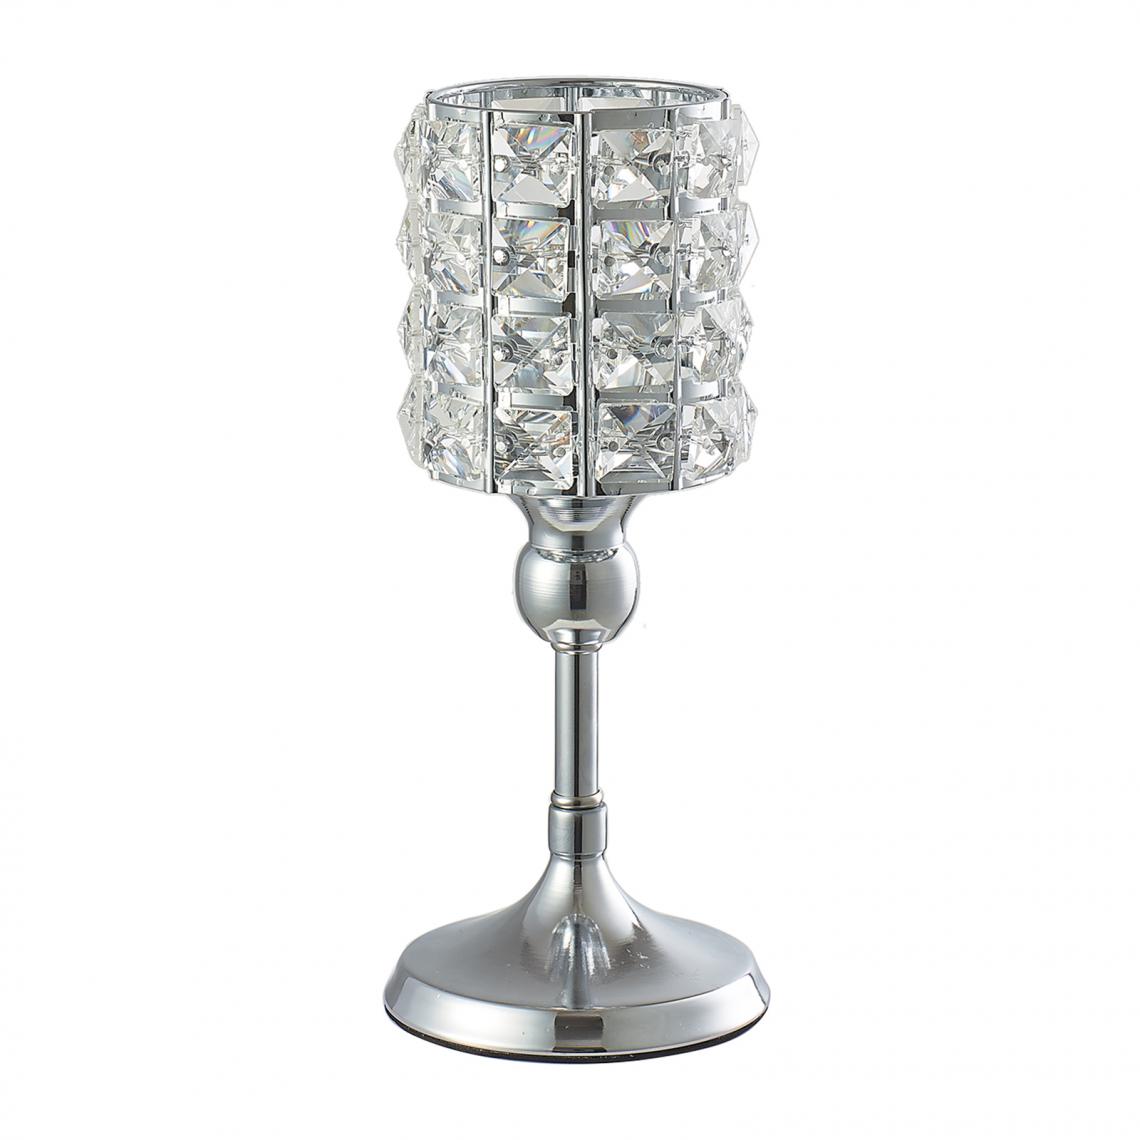 marque generique - Bougeoirs En Cristal Moderne Stand Tea Light Candlestick 11x31cm - Bougeoirs, chandeliers